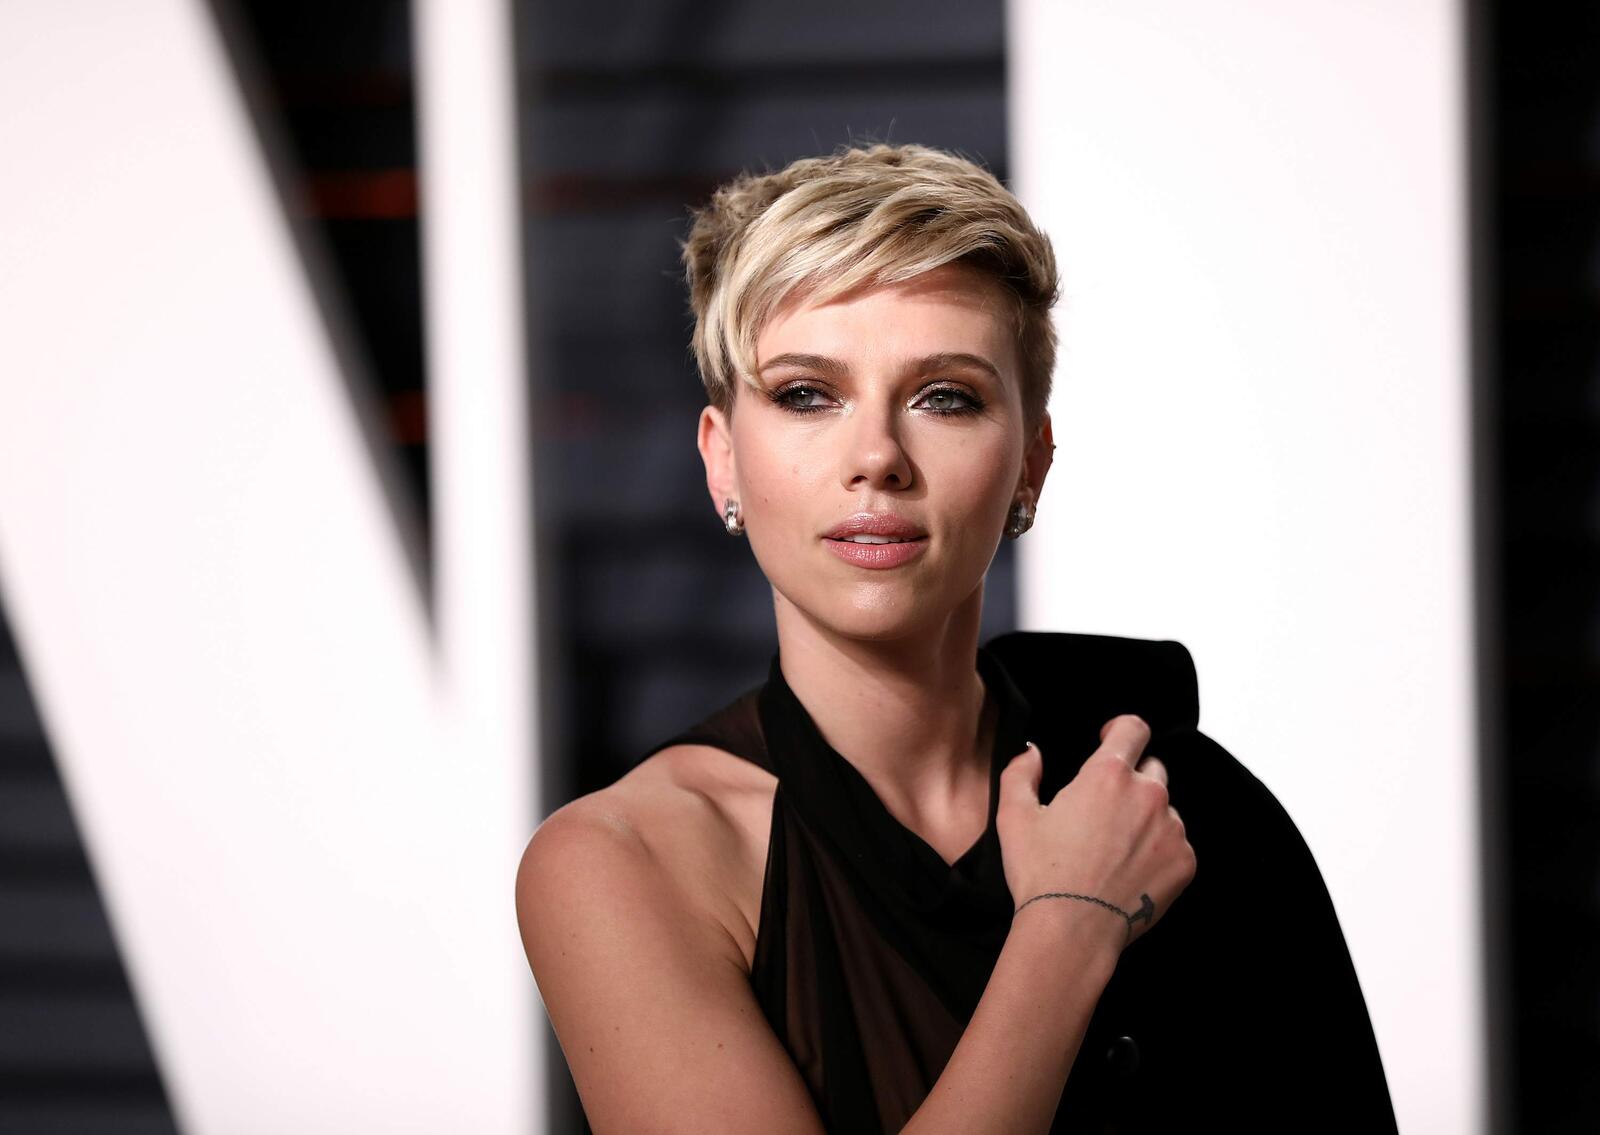 Wallpapers Scarlett Johansson celebrities short hair on the desktop